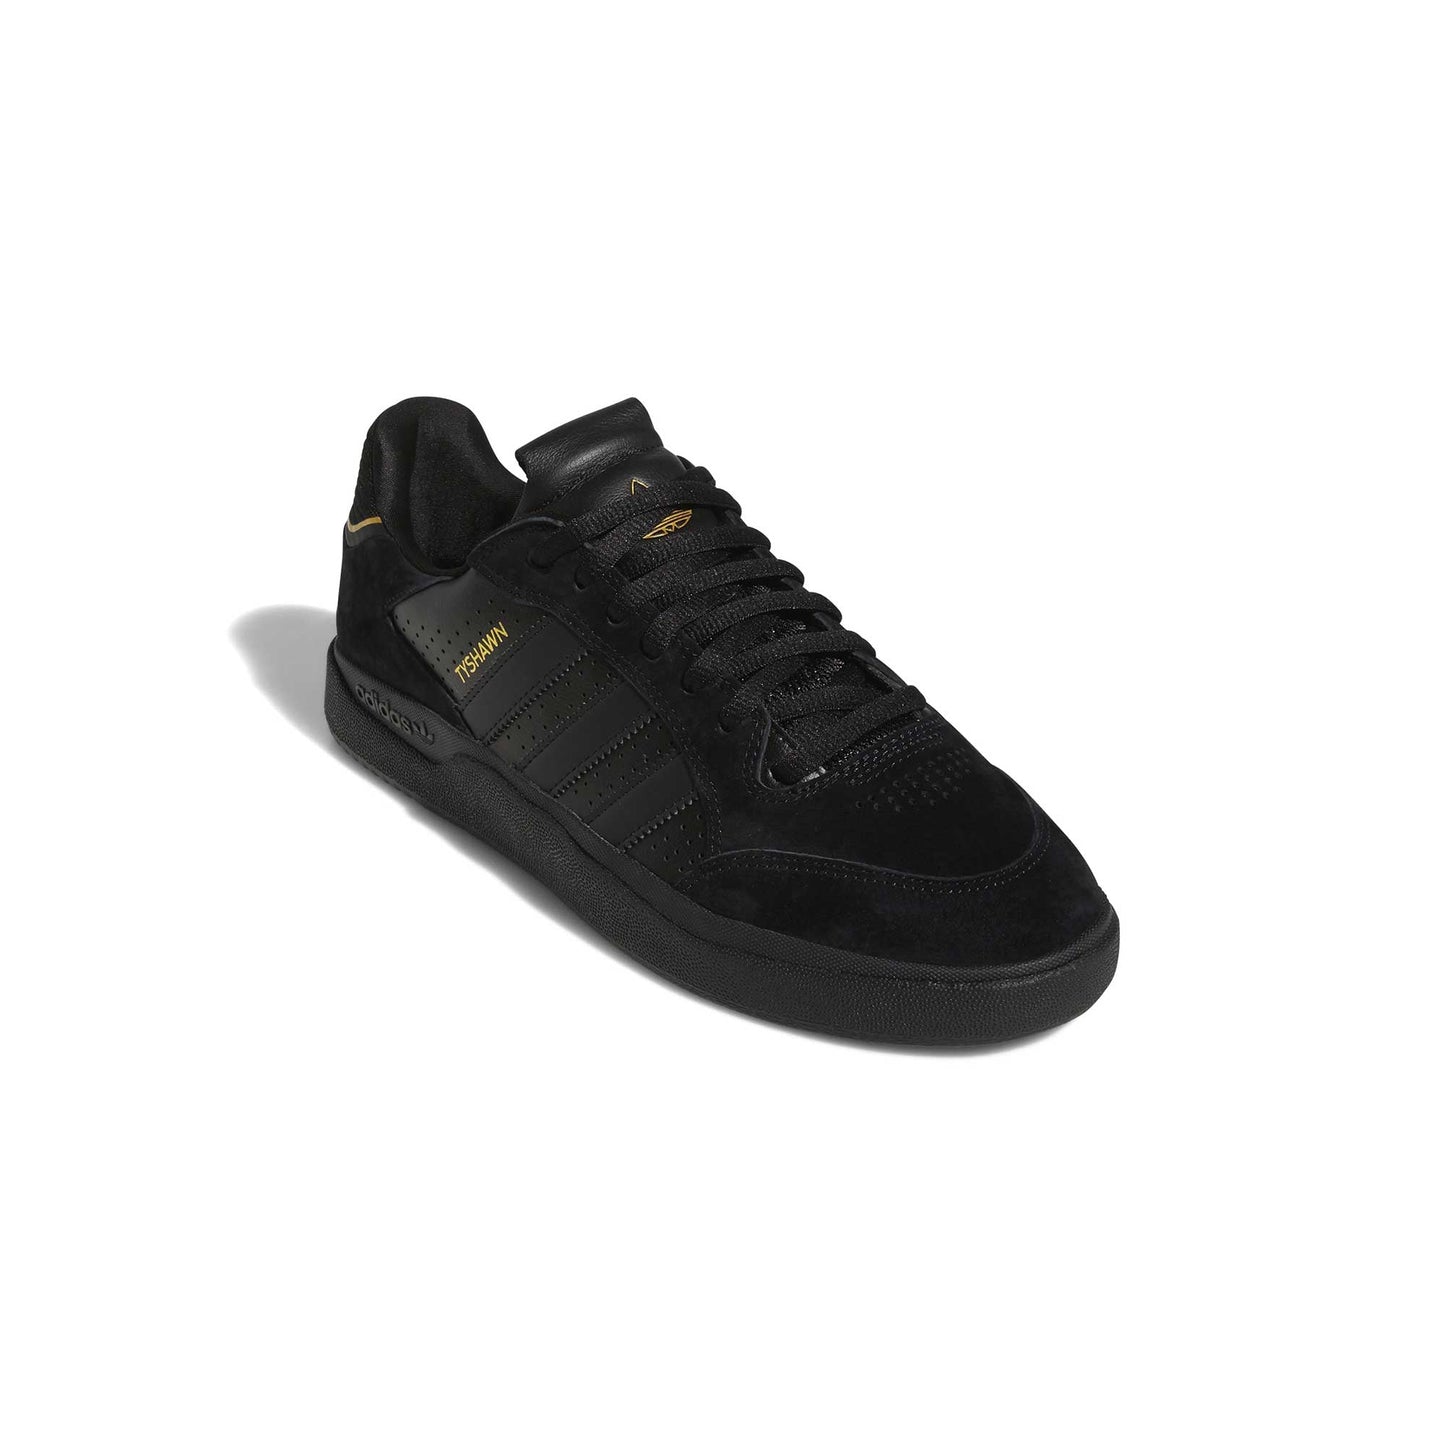 Adidas Tyshawn Low, core black / core black / gold metallic - Tiki Room Skateboards - 2